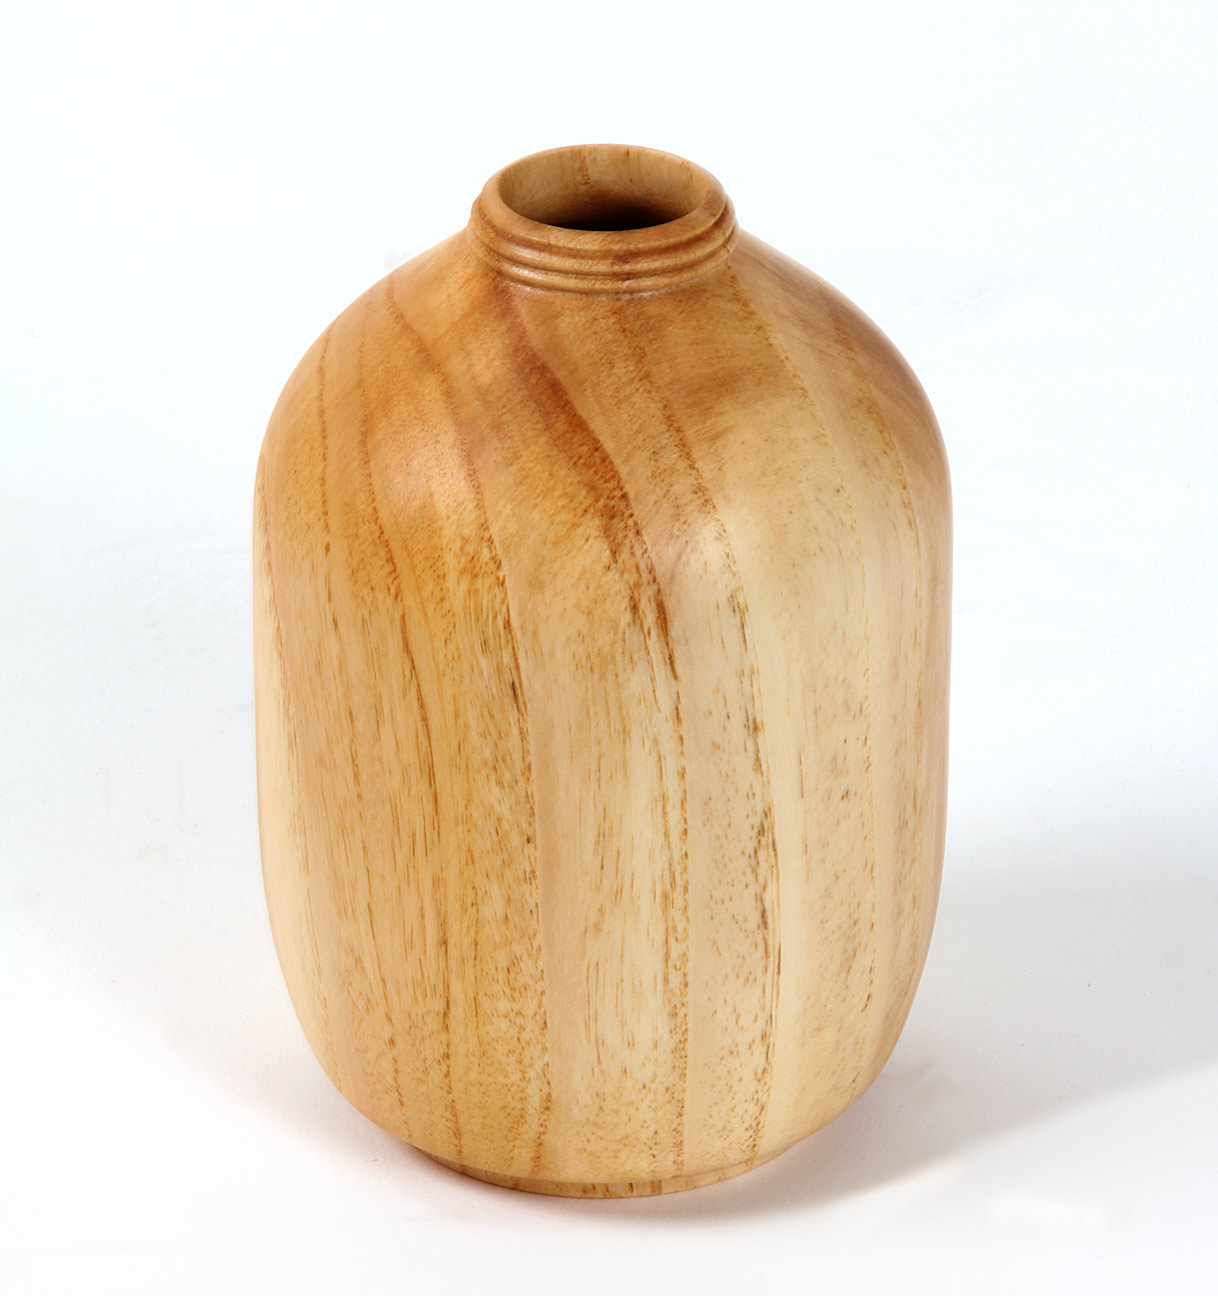 Vase. Ash wood from salvaged street tree